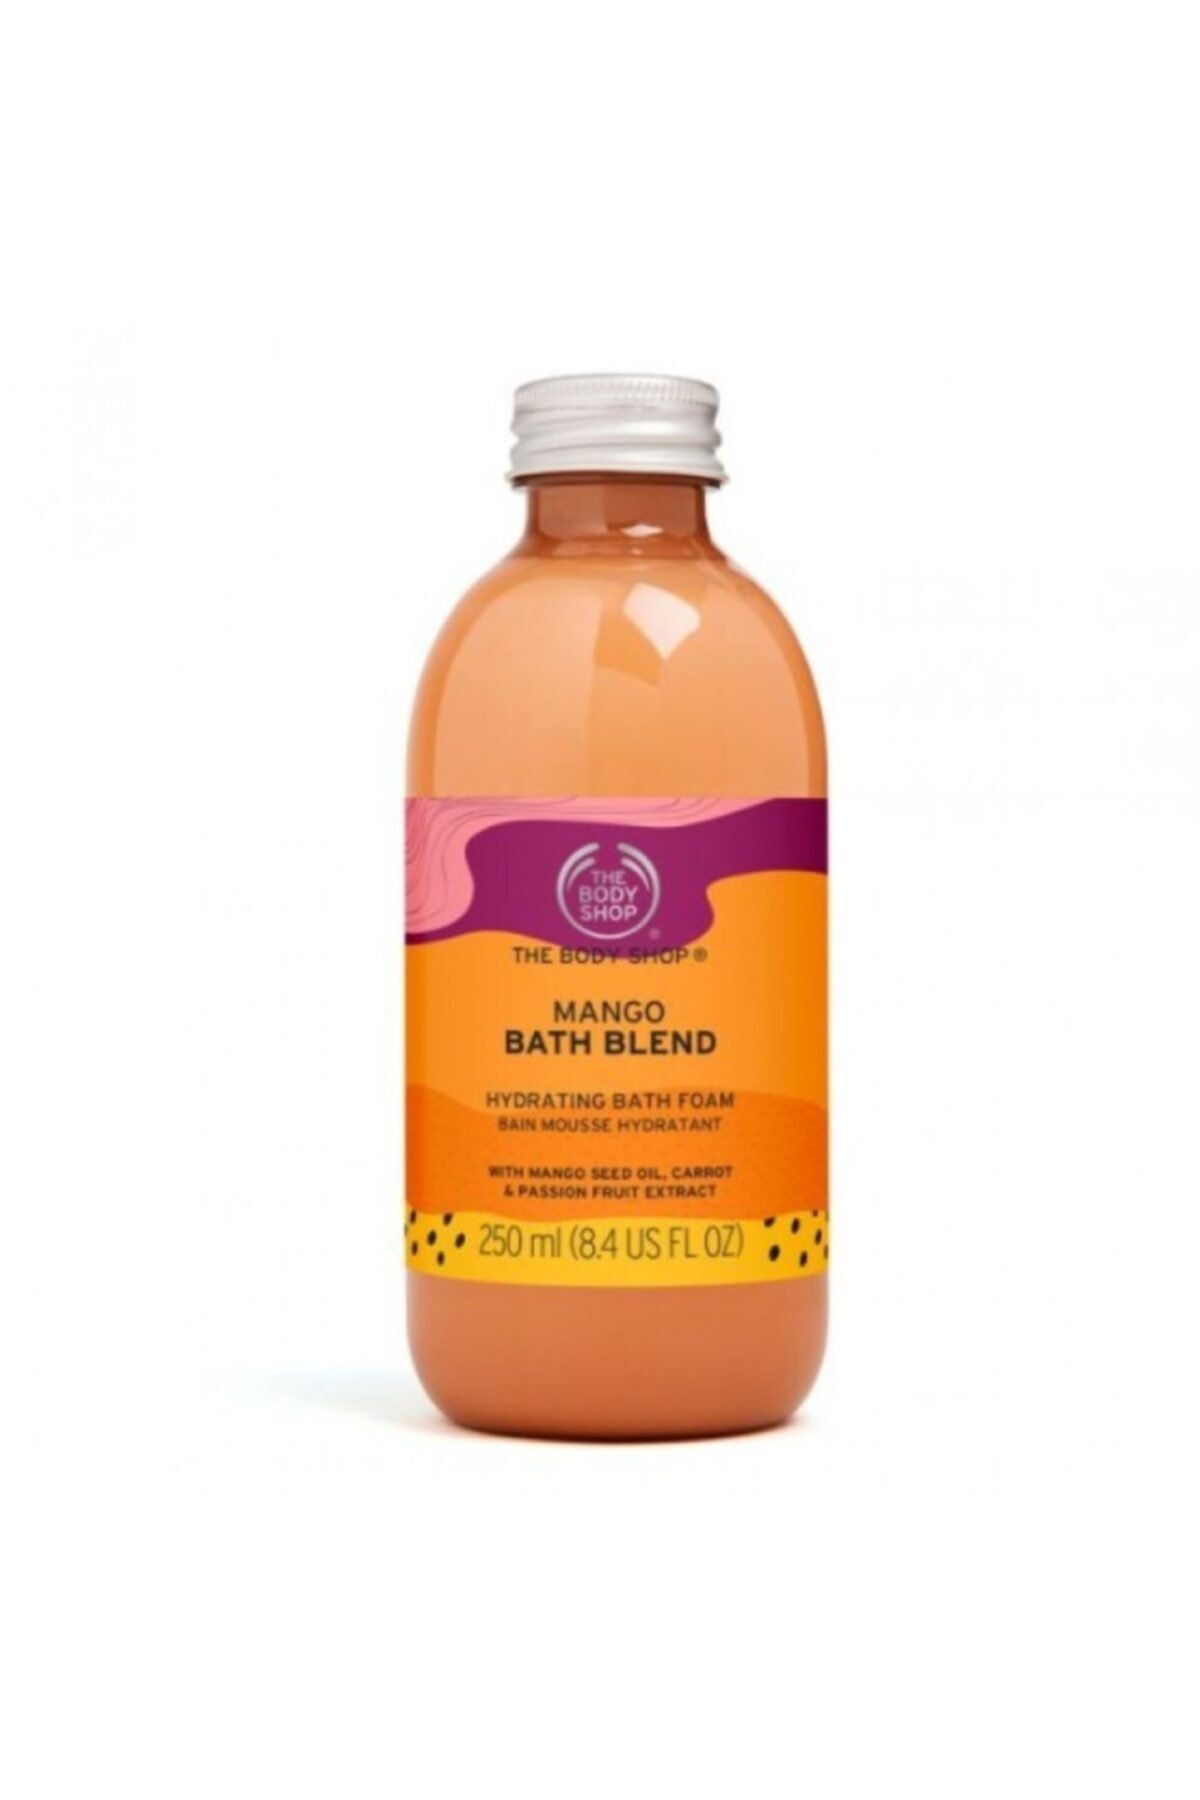 THE BODY SHOP Bath Blend Mango 250ml